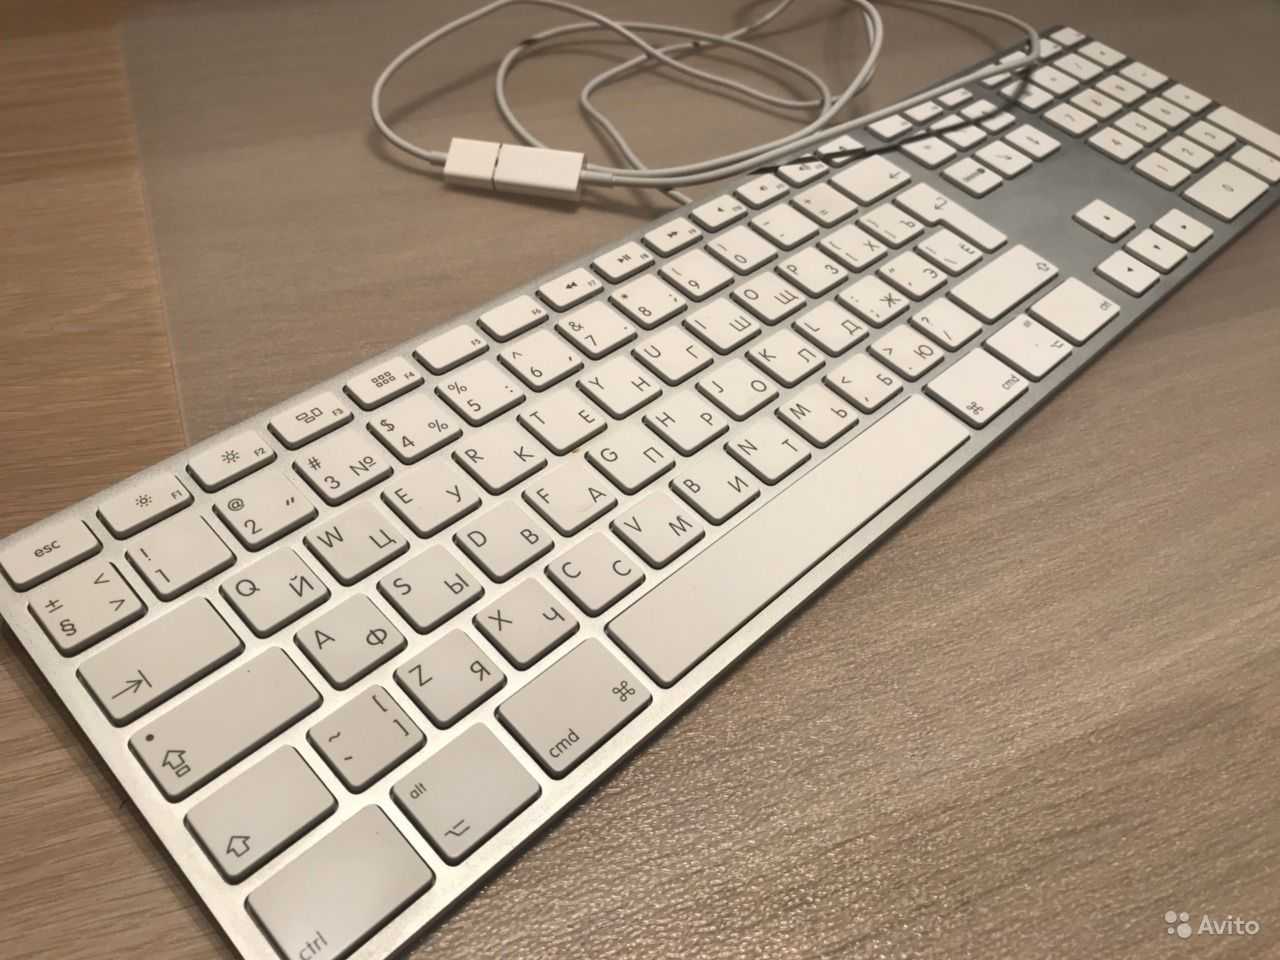 Apple mb110rs/b wired keyboard white usb (белый) - купить , скидки, цена, отзывы, обзор, характеристики - клавиатуры